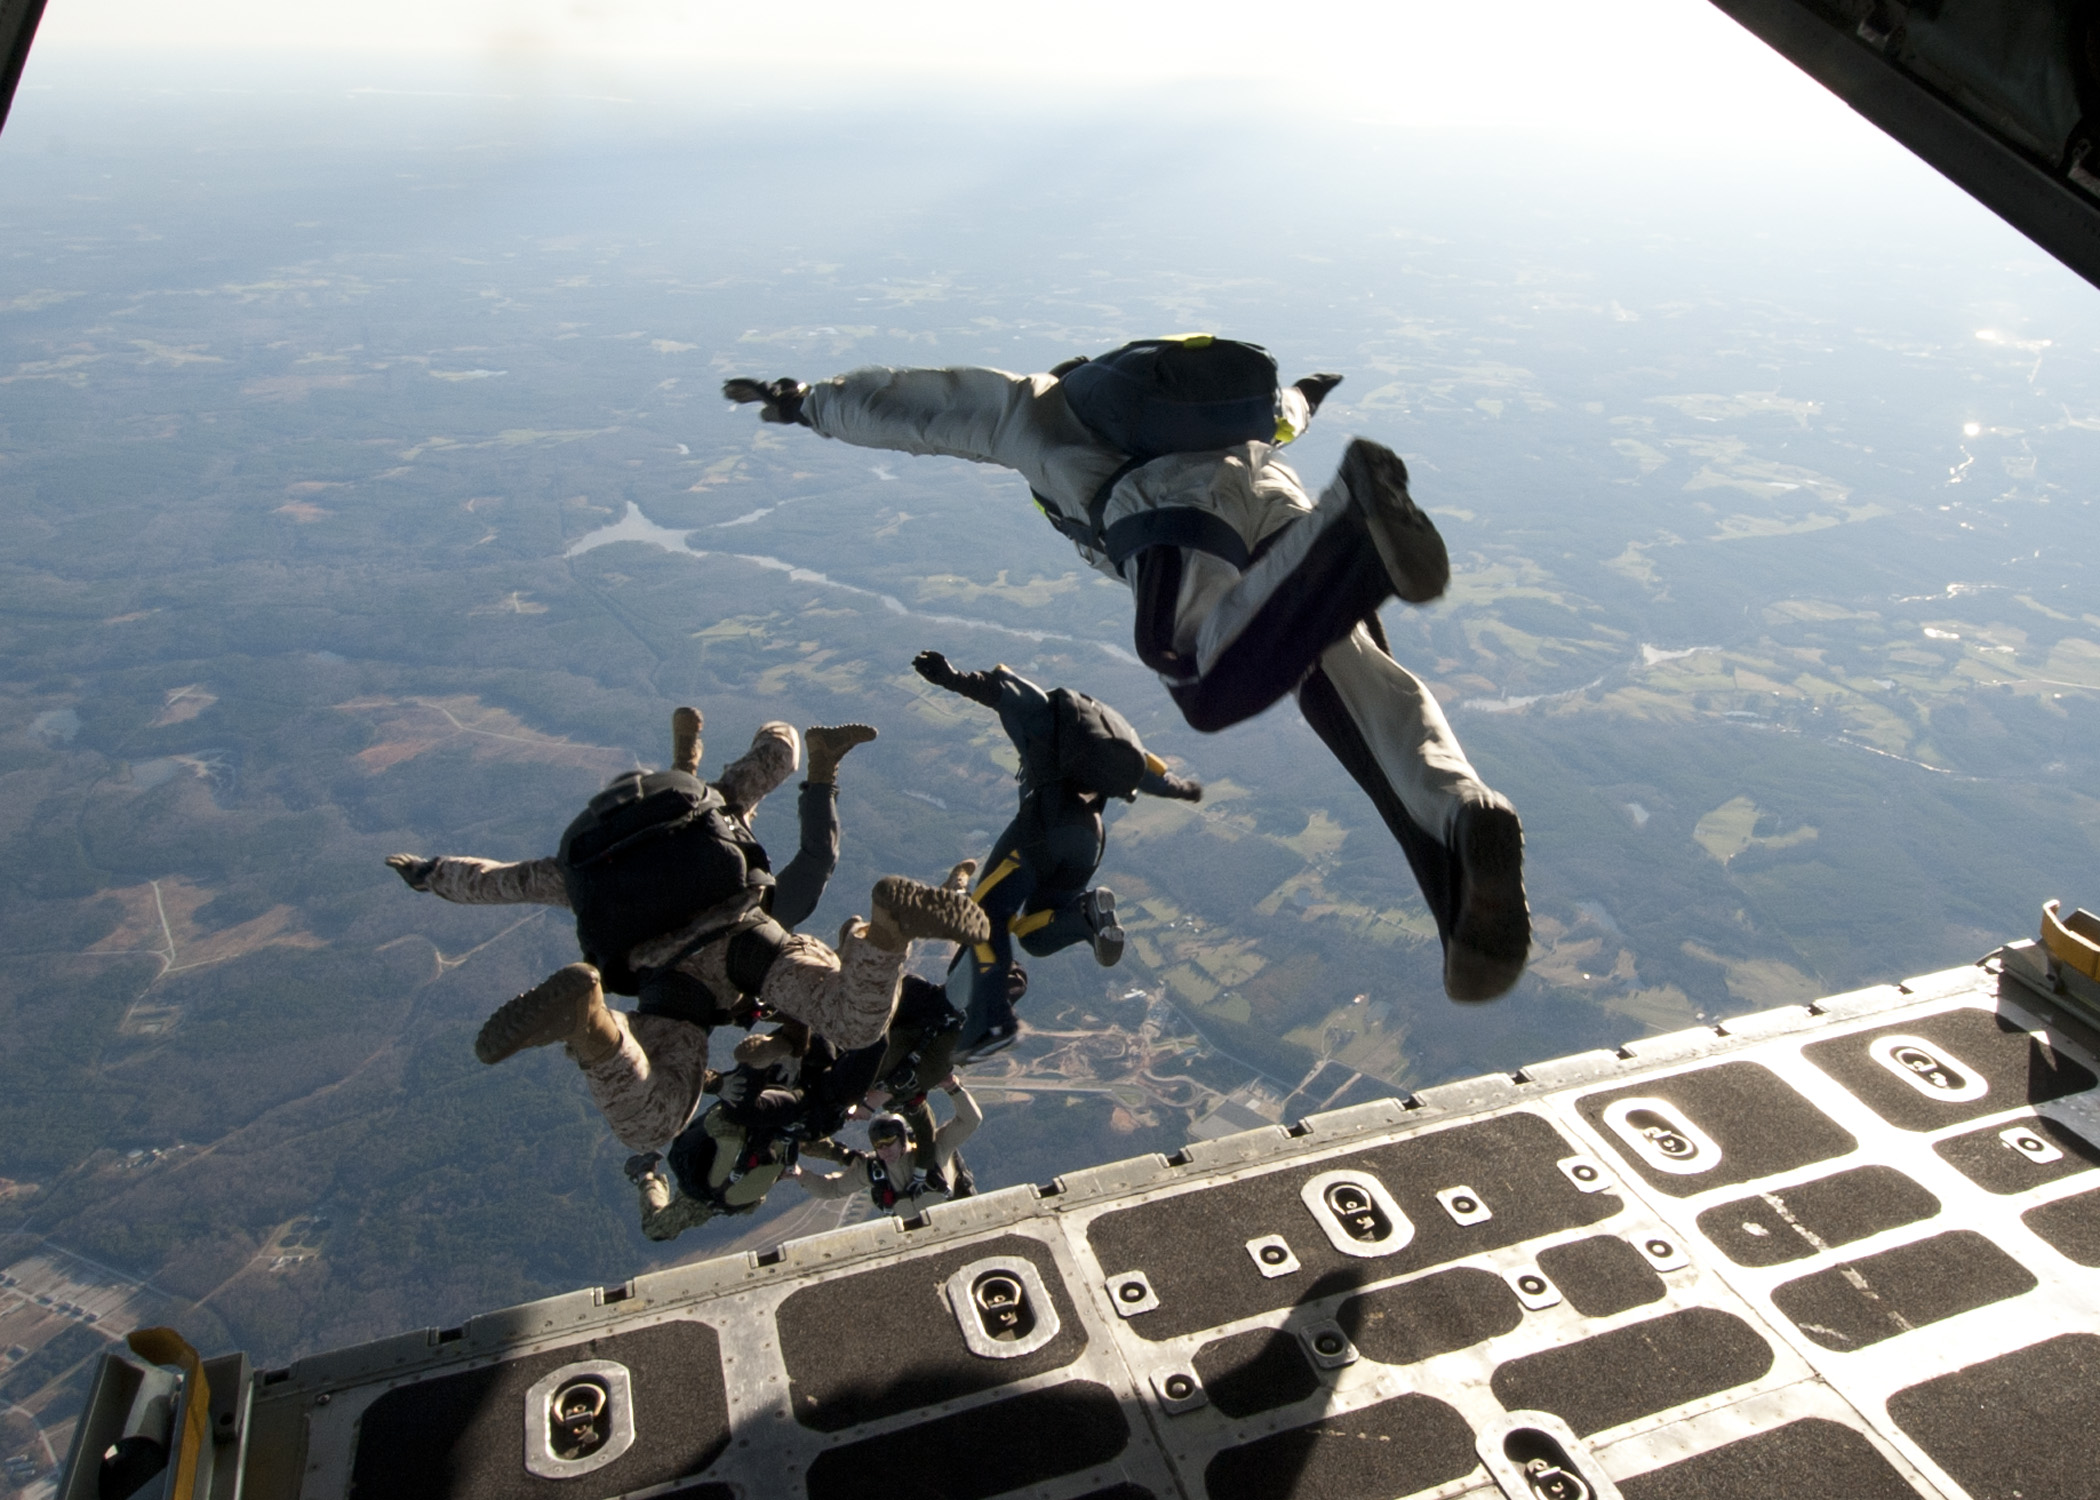 Navy Seals jumping from an aircraft